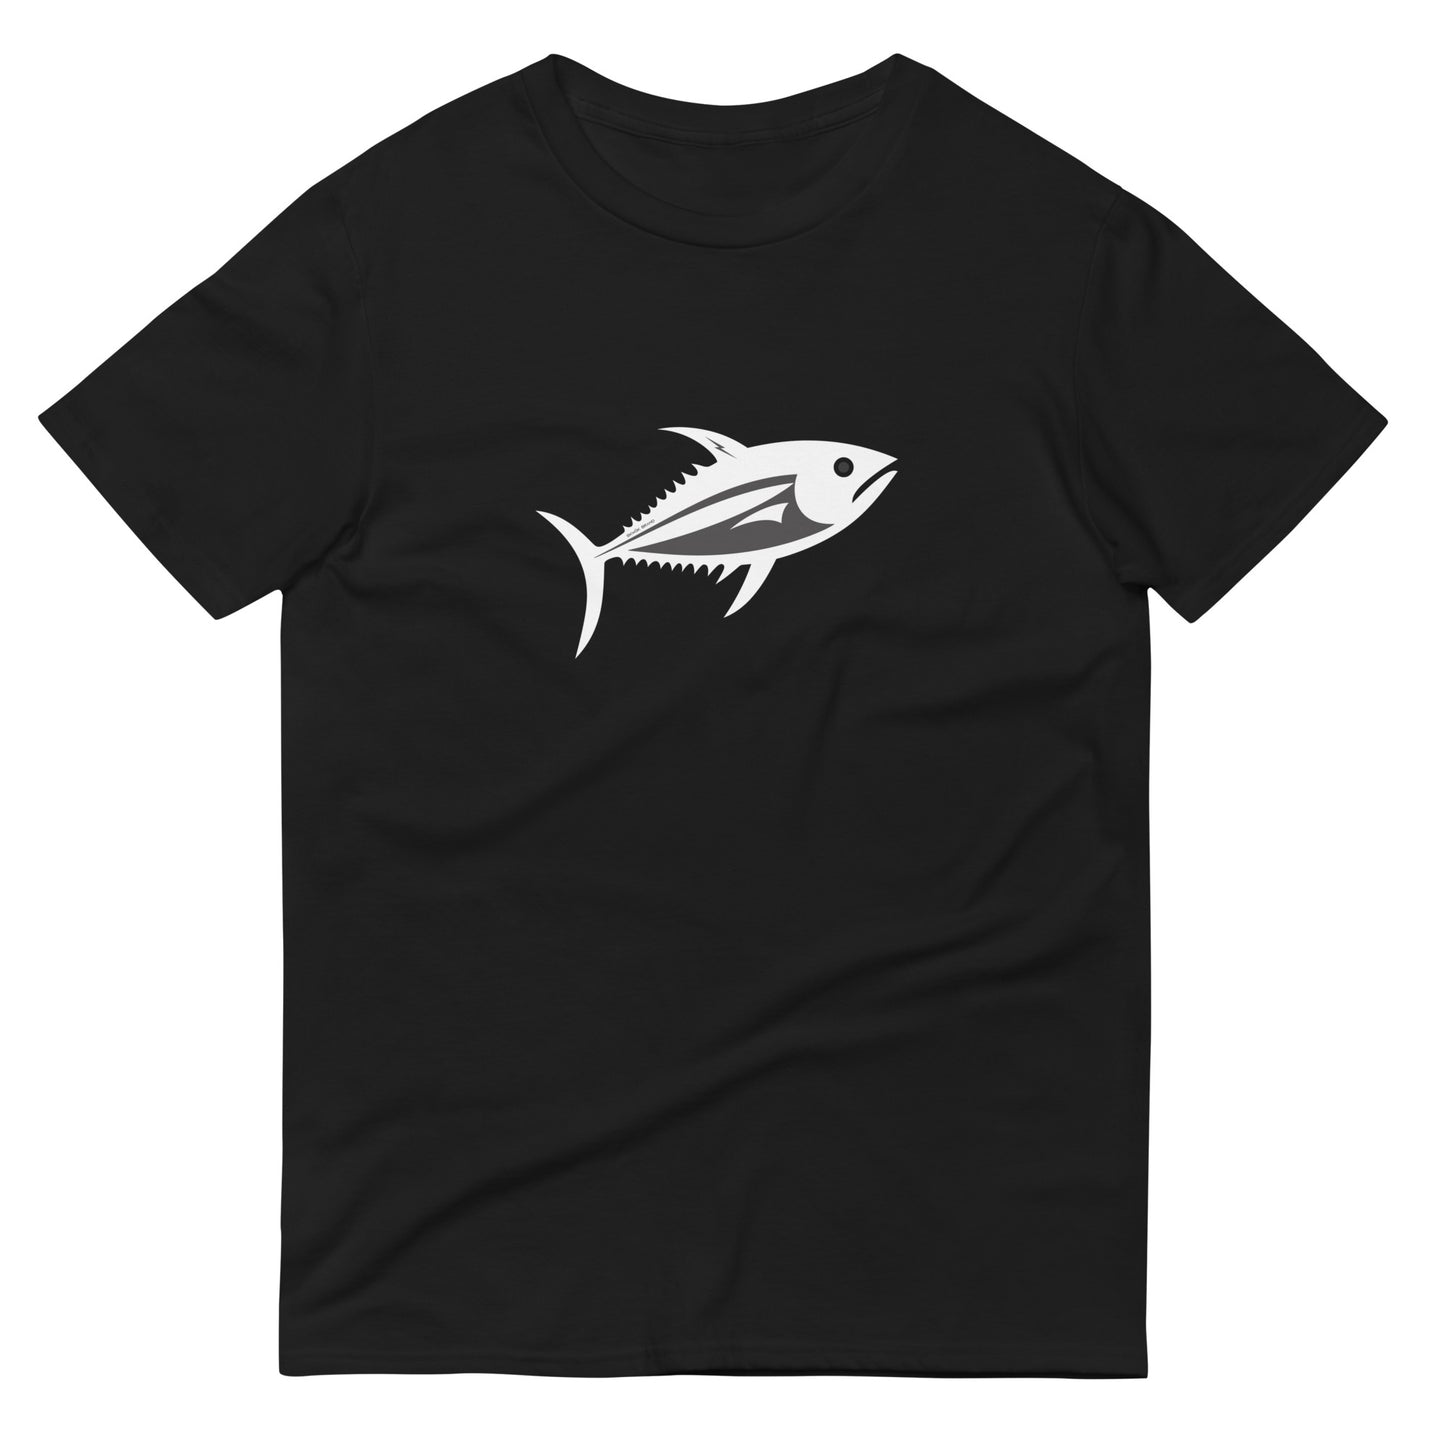 Skwok Brand / #20 / T-shirt / Big Tuna